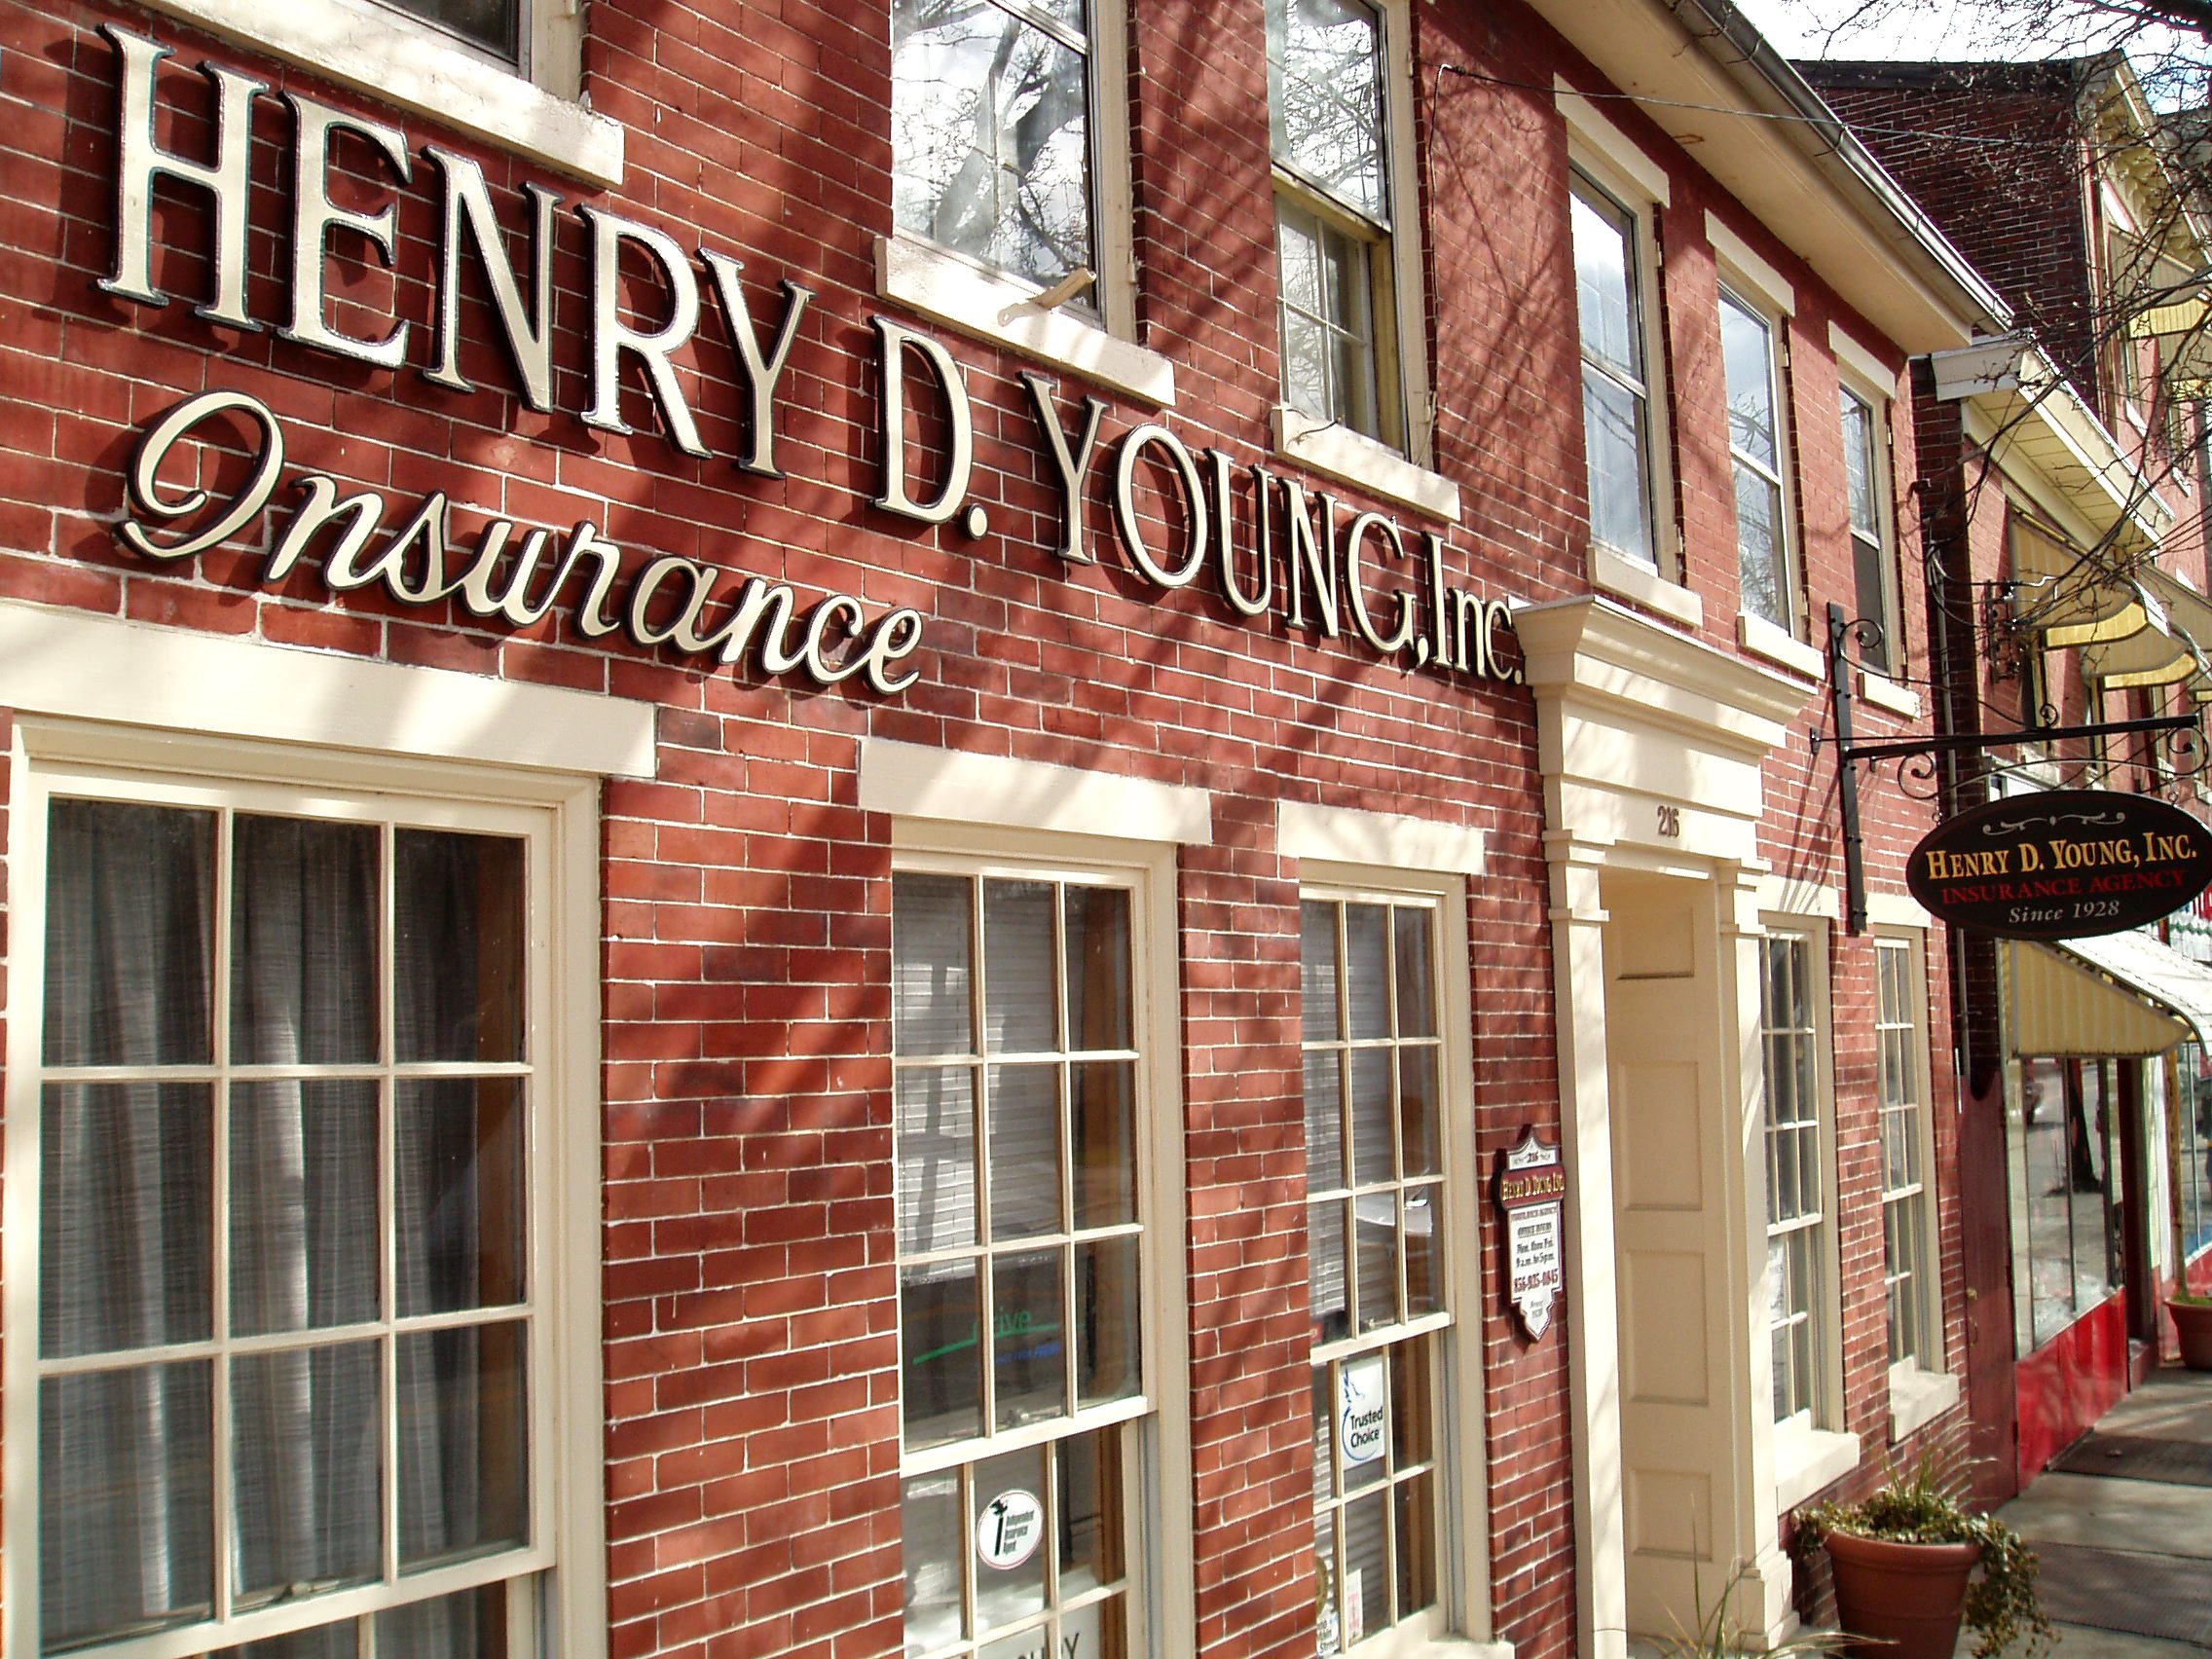 Henry D Young Inc Insurance Agency, 216 East Broadway, Salem, NJ 08079-0557, www.hdyoung.com, insure@hdyoung.com, 856.935.0845, 856.935.4223 fax